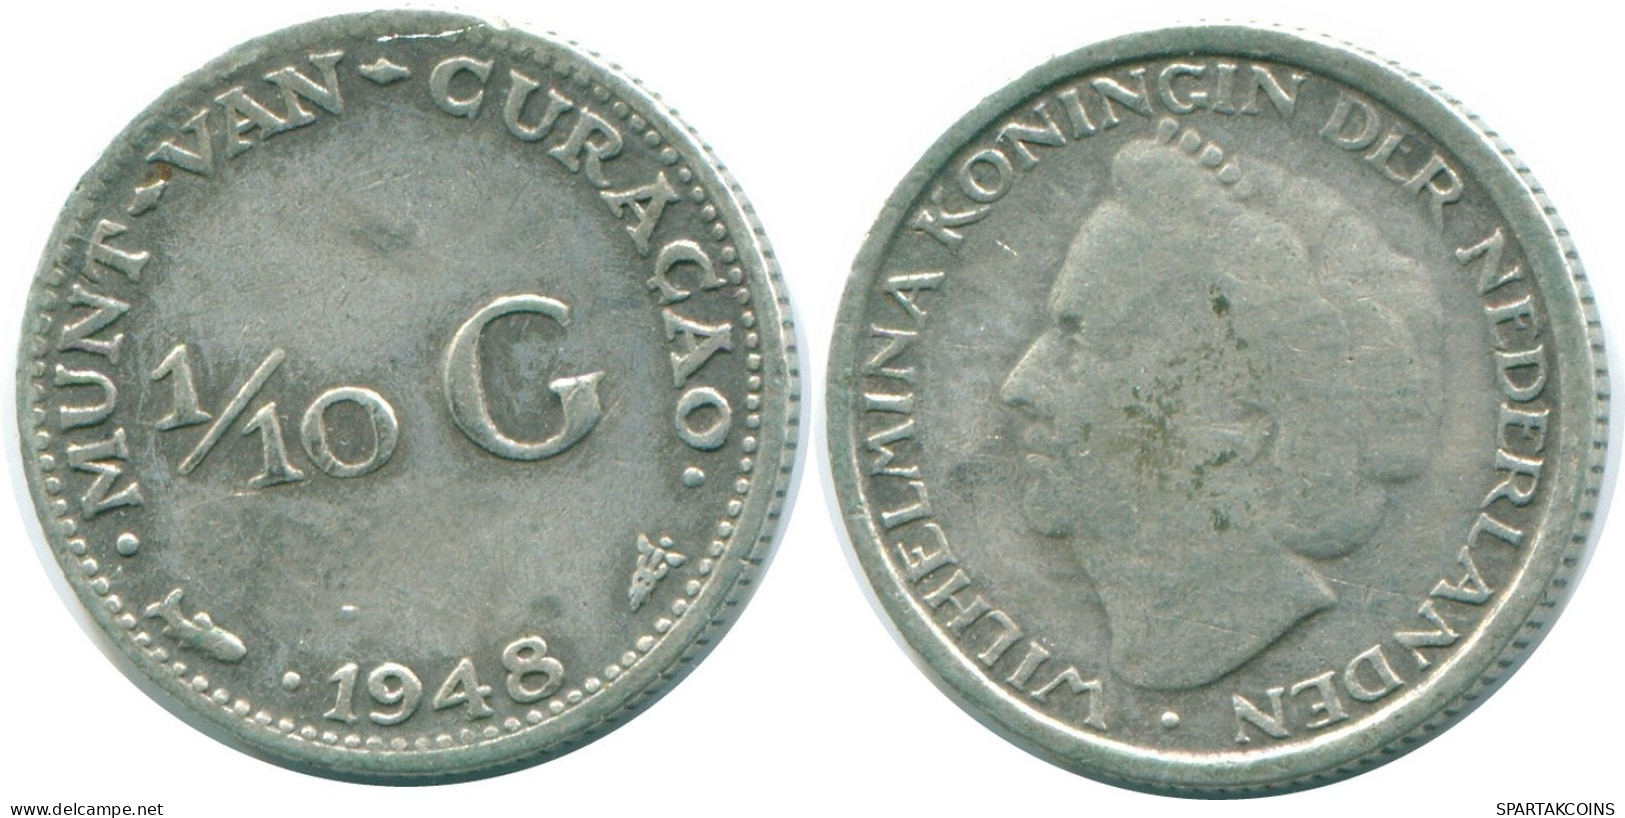 1/10 GULDEN 1948 CURACAO NIEDERLANDE SILBER Koloniale Münze #NL11897.3.D.A - Curaçao